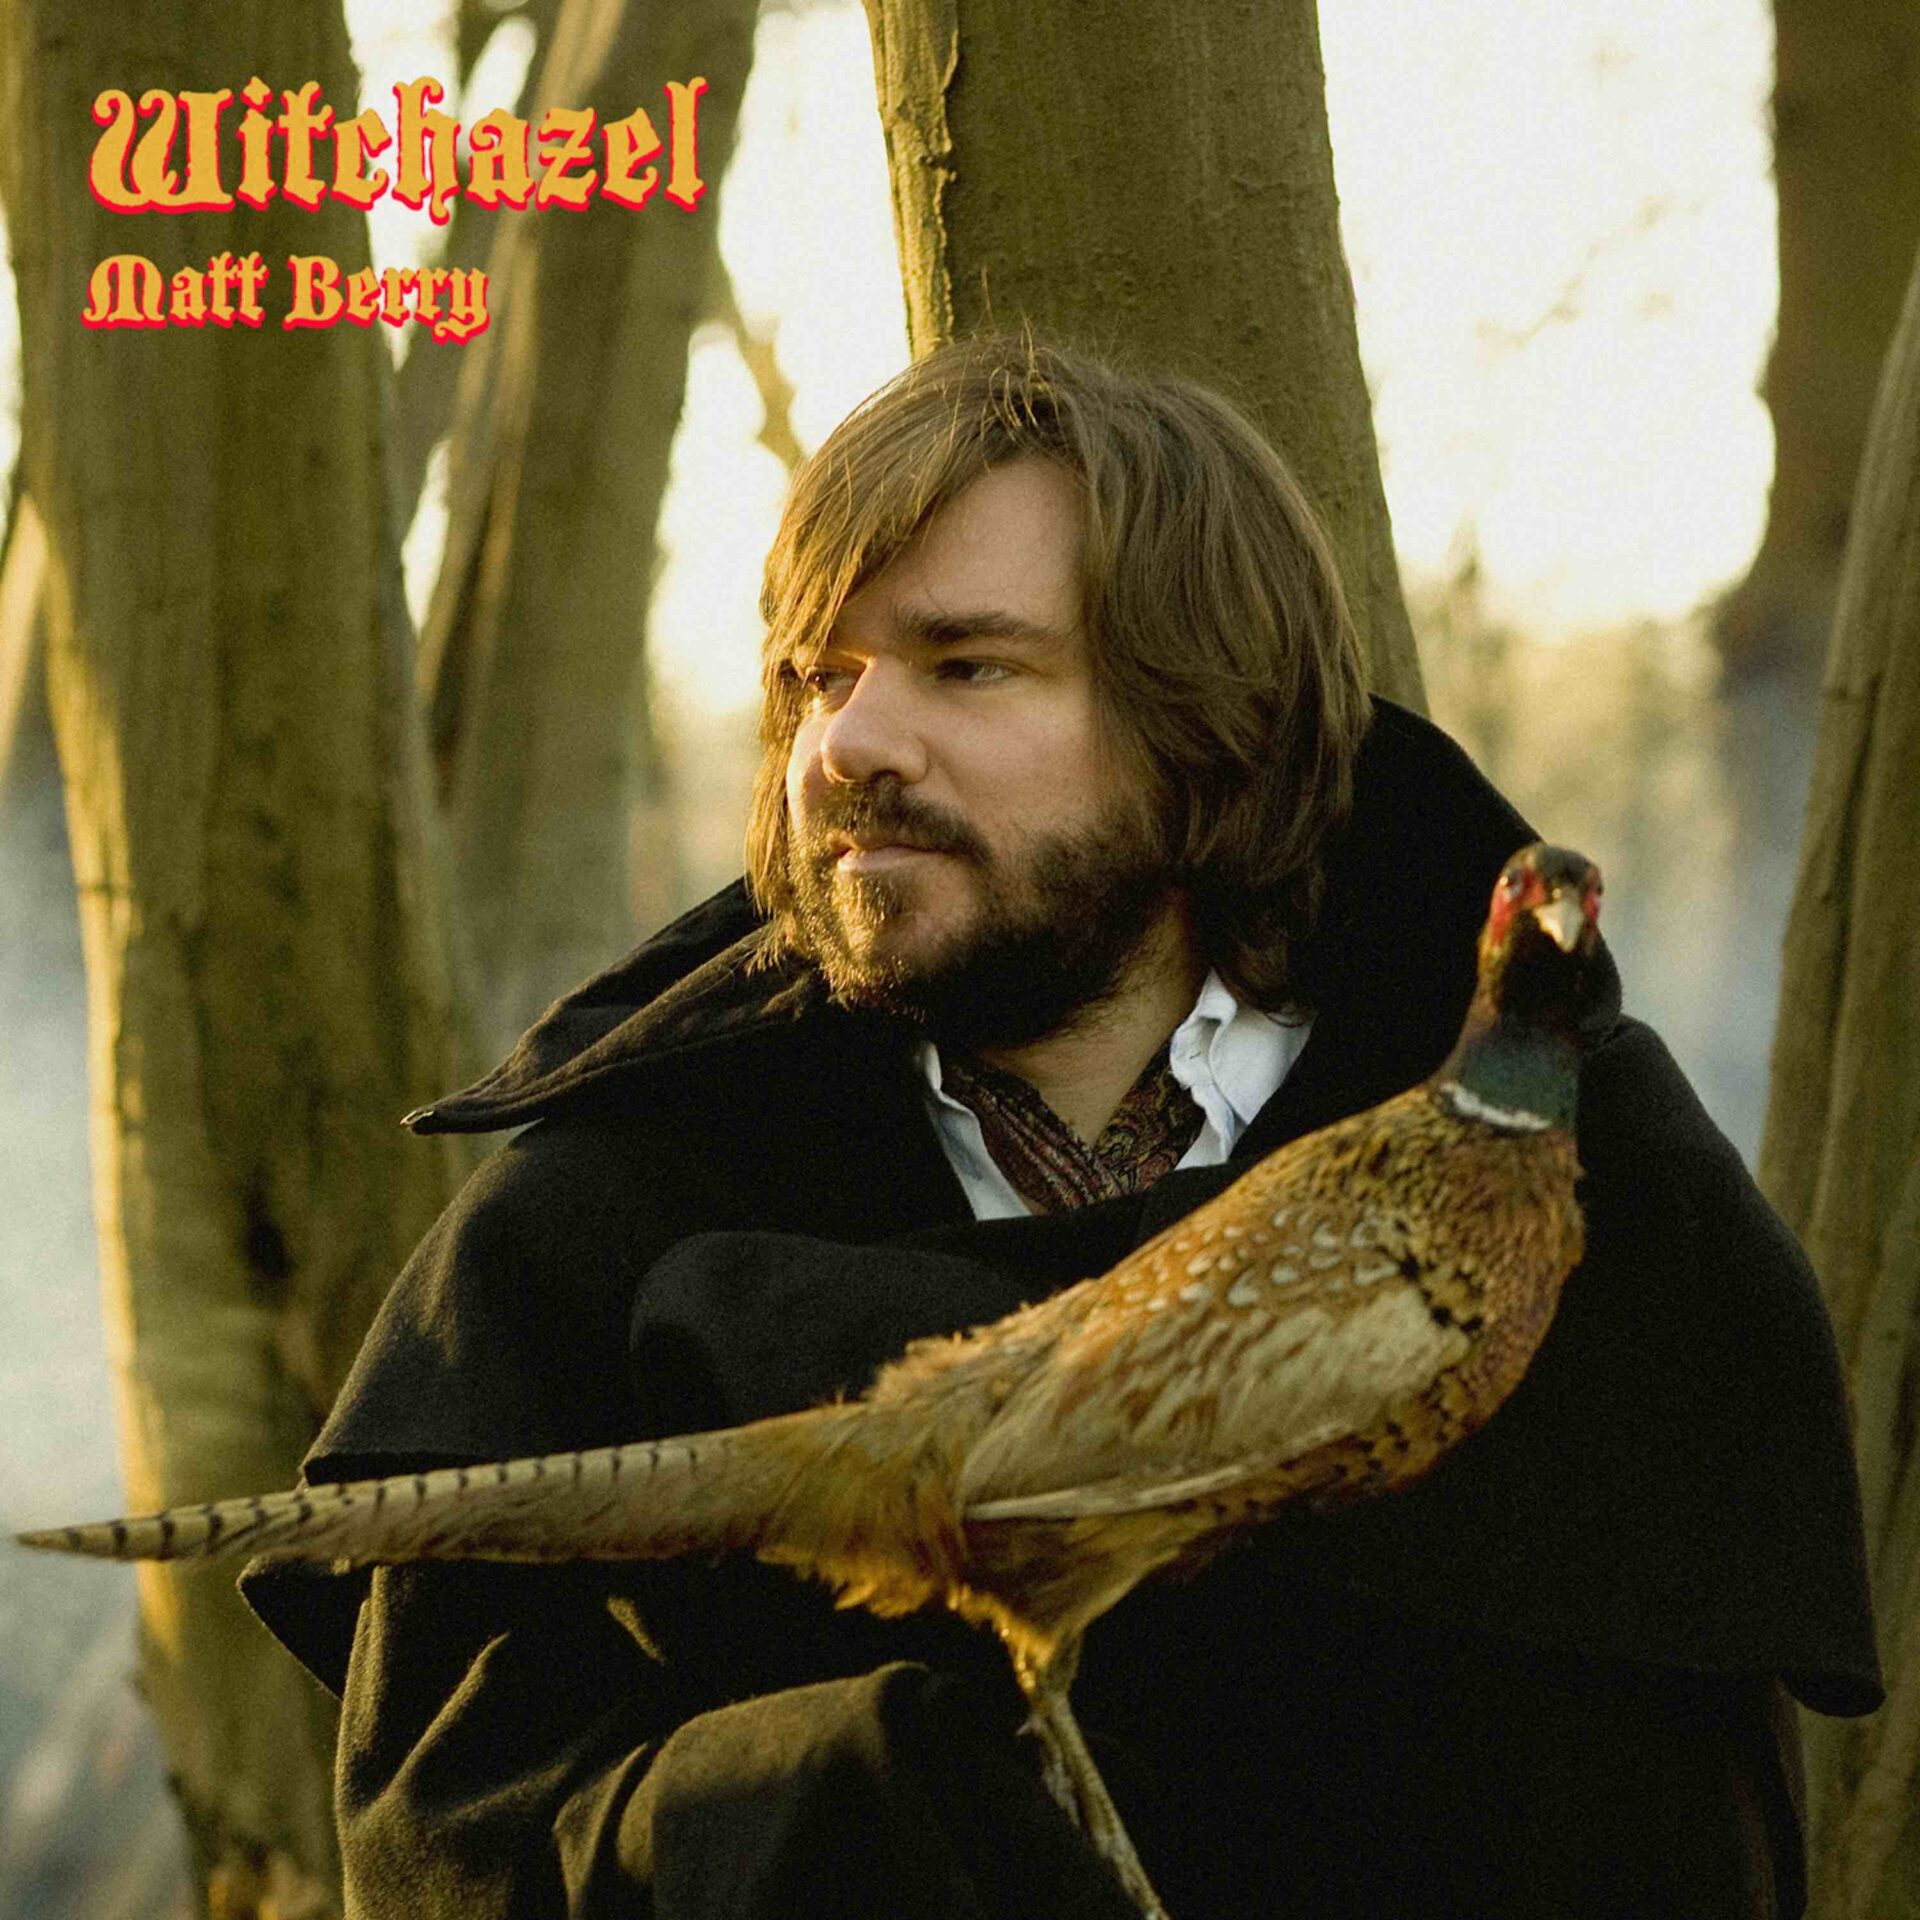 Matt Berry vinyl reissues - Witchazel & Kill The Wolf 2